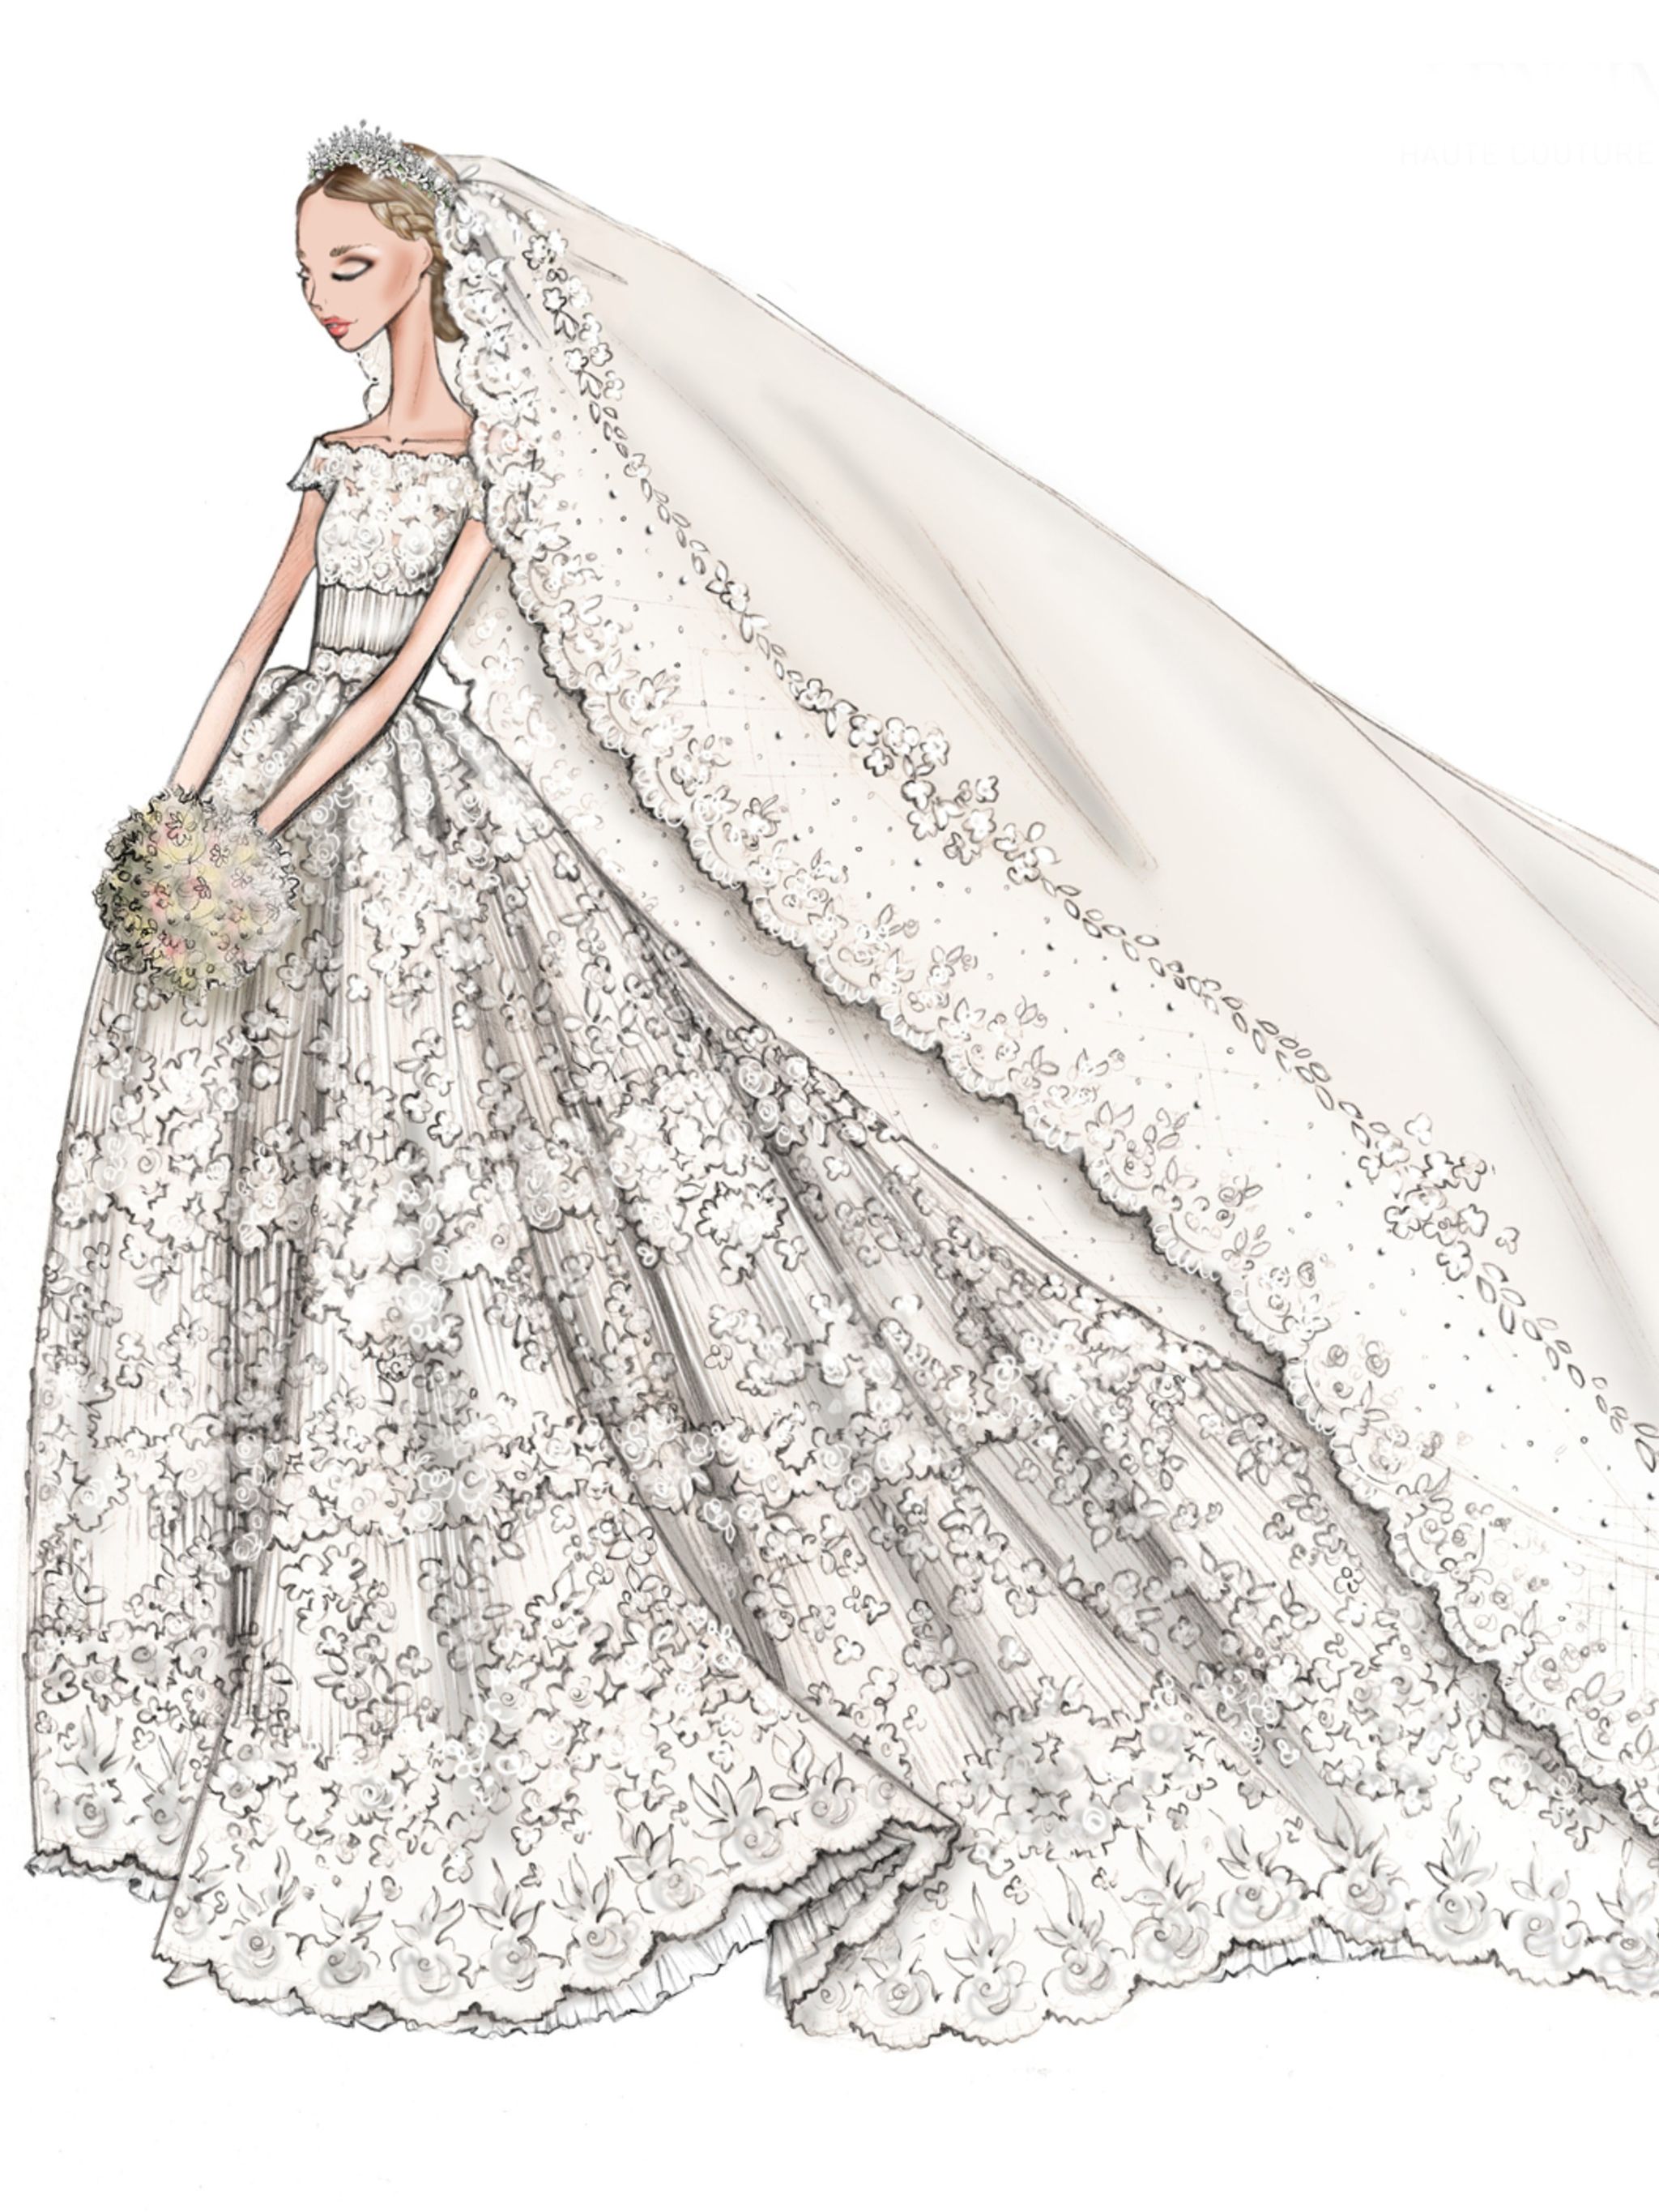 Valentino designs royal wedding gown